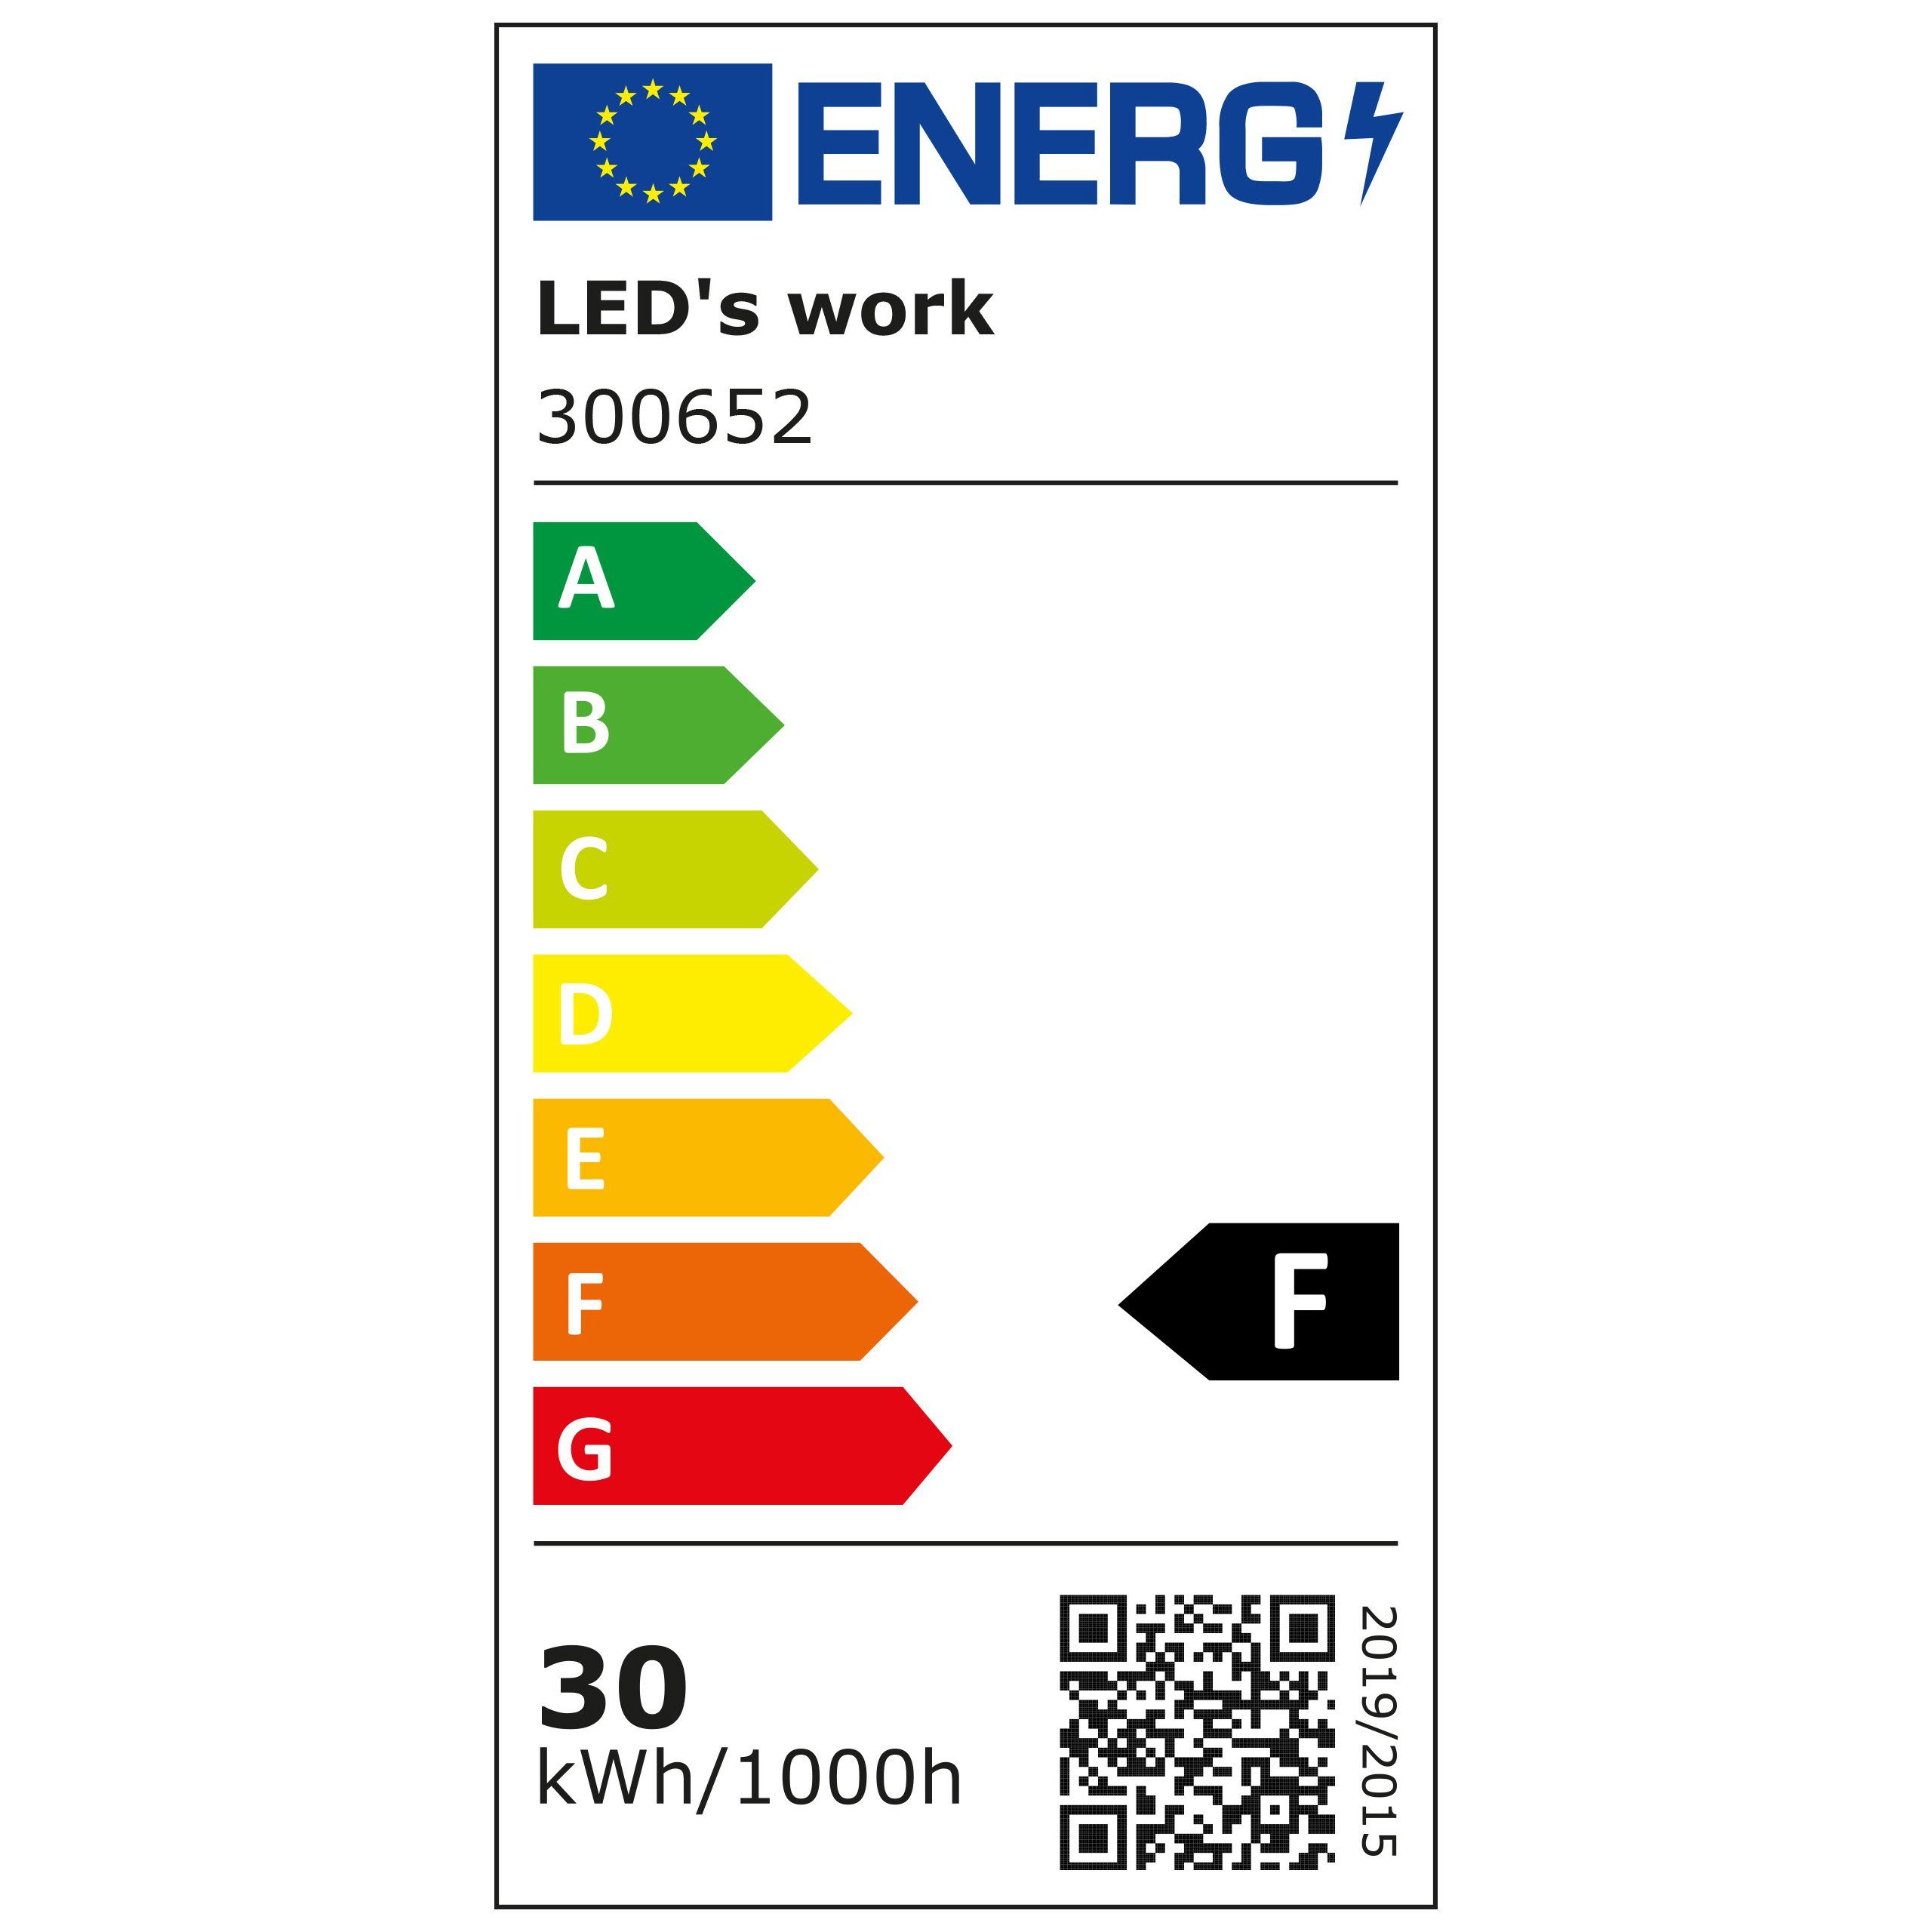 LED LED's 30W LED, IP65 Zuleitung Arbeitsleuchte 0300652 work LED-Arbeitsstrahler, 1,5m